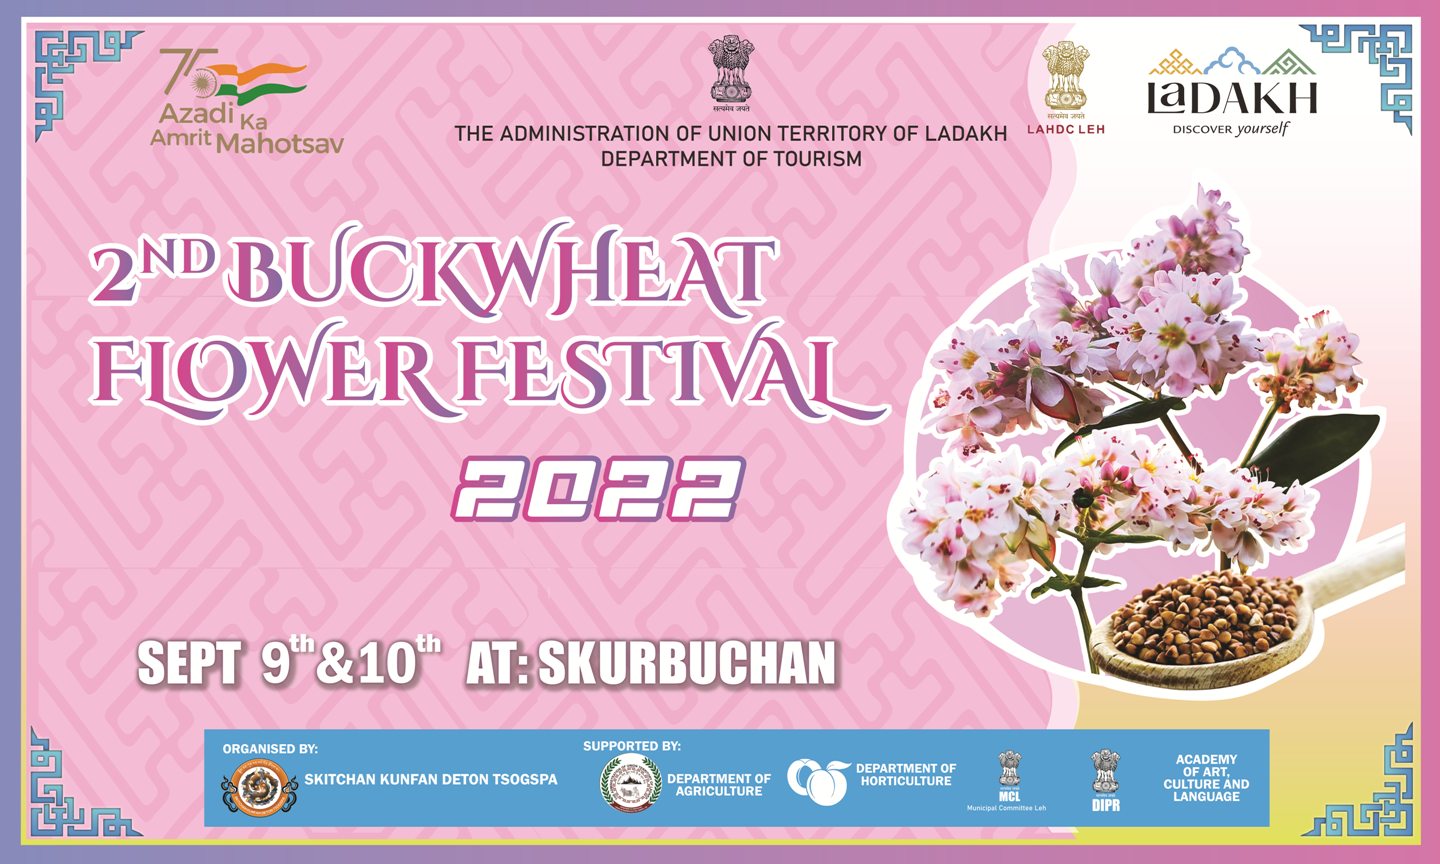 Buckwheat Festival